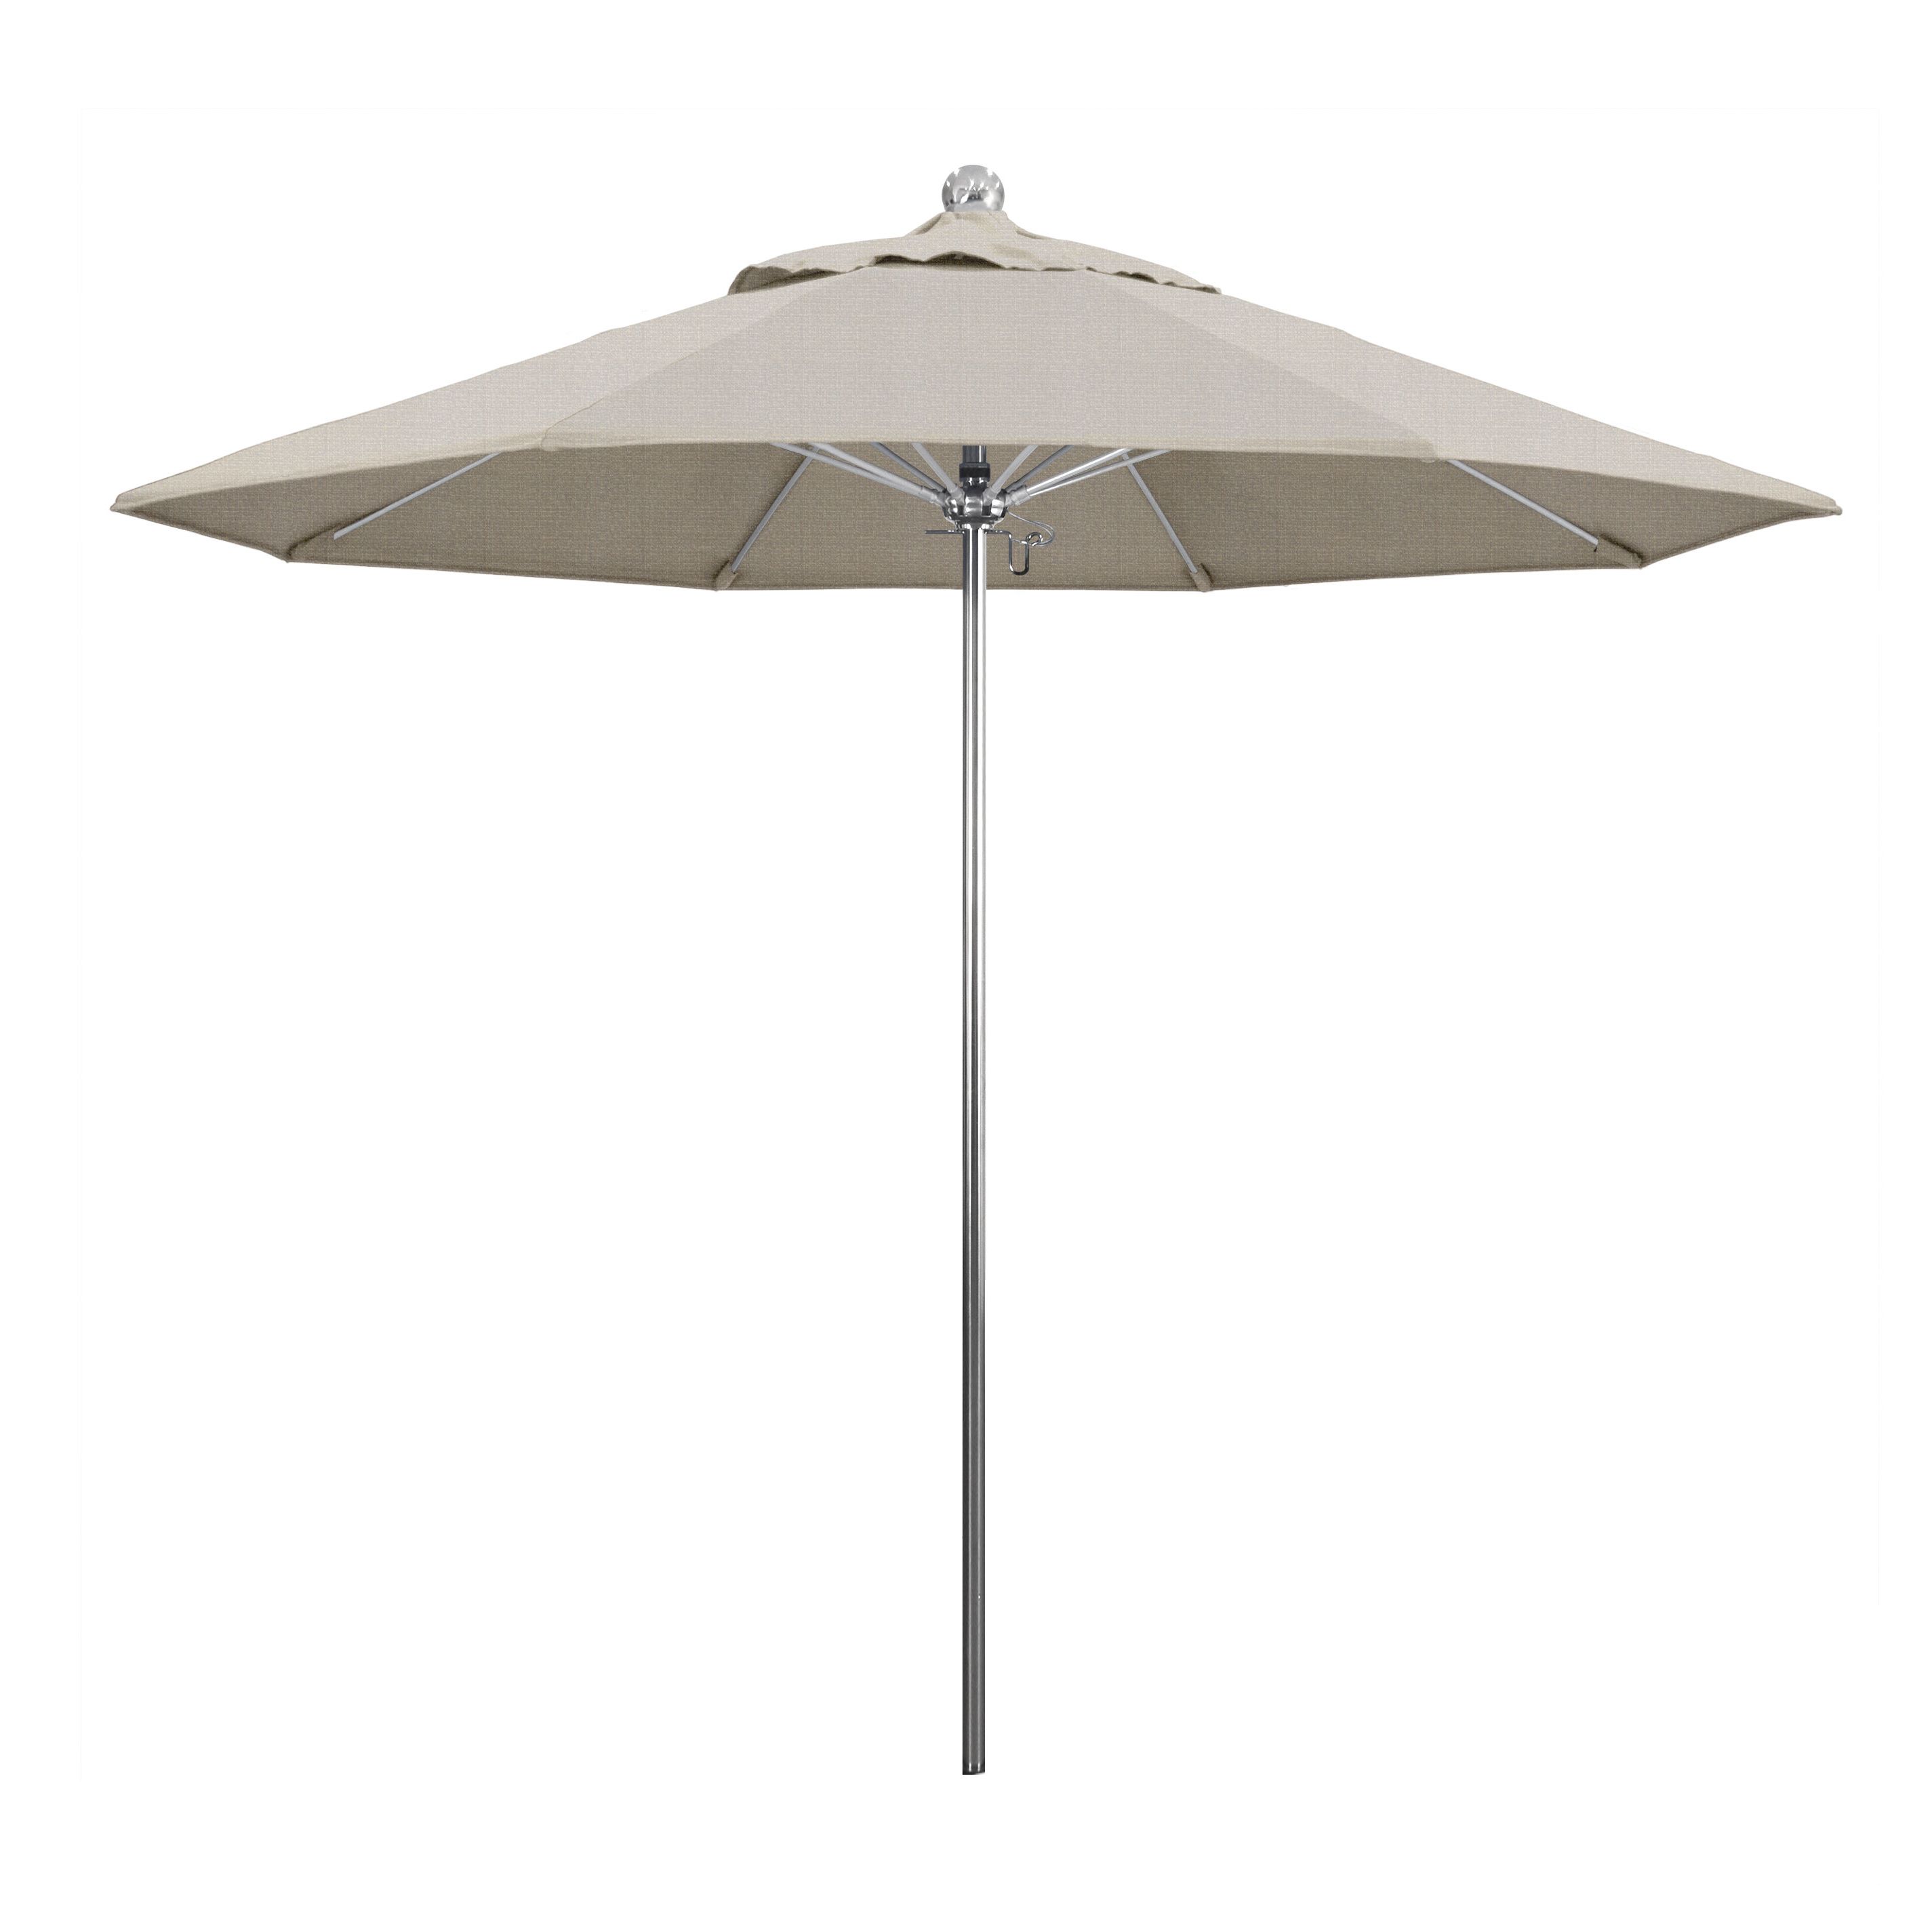 2020 Markley Market Beach Umbrellas With Regard To Allure Series 9' Market Umbrella (View 14 of 20)